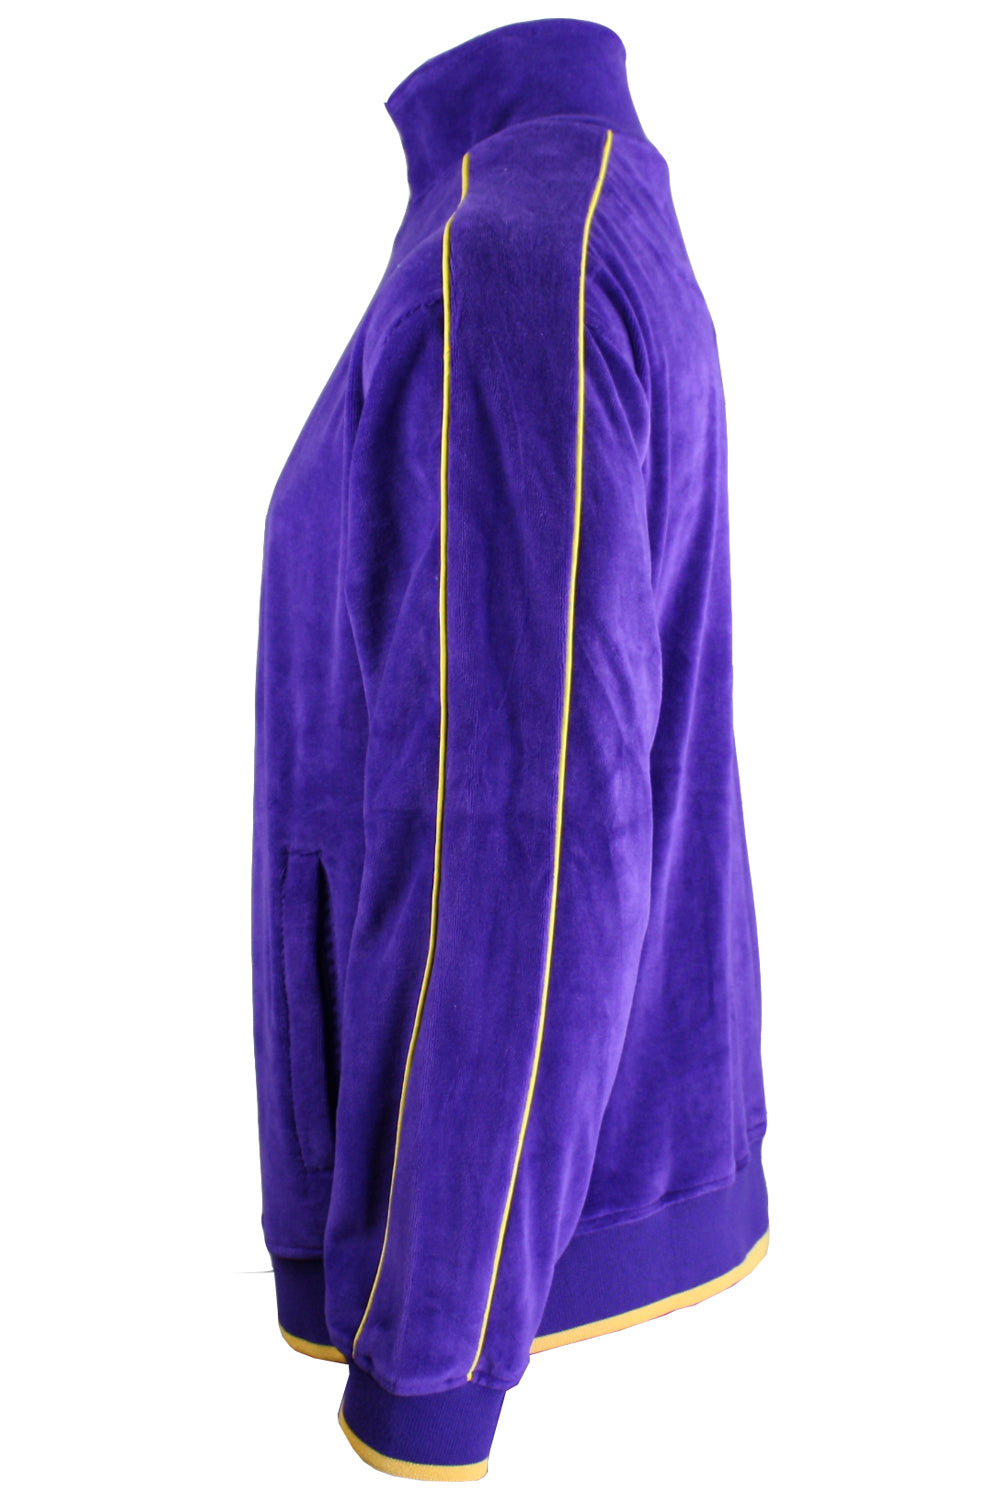 Purple Color Art Silk Mens Kurta Jacket Set